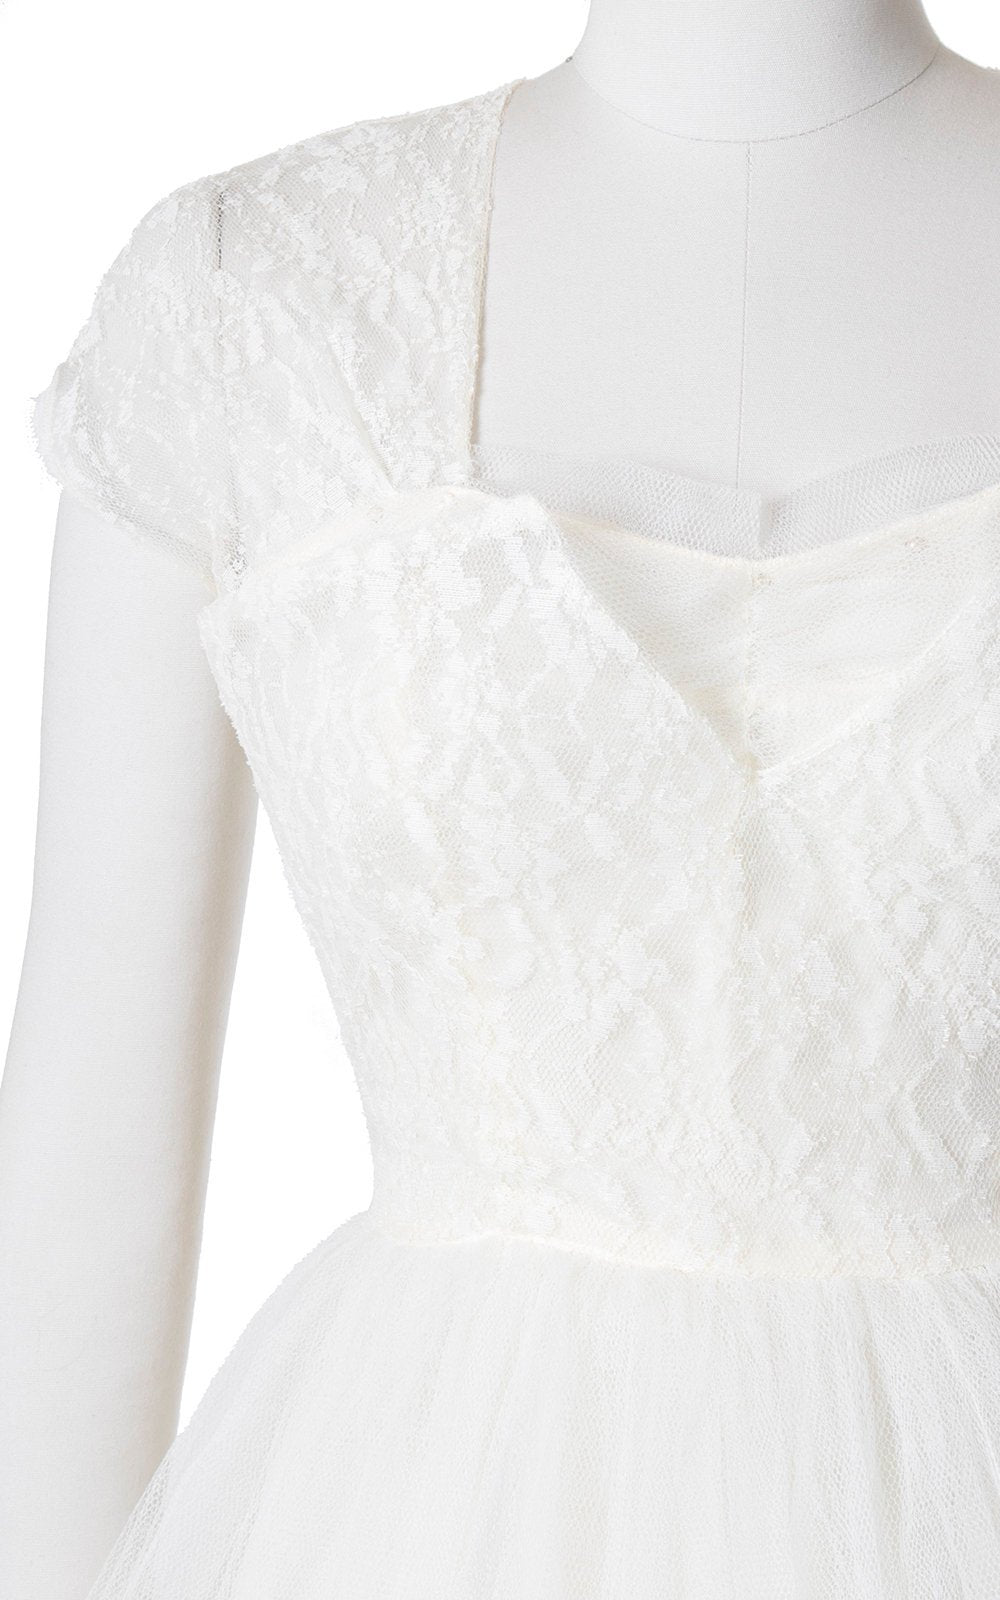 Vintage 1950s Wedding Dress | 50s Cream Lace & Tulle Bridal Gown Sweetheart Neckline Cap Sleeve Full Length Dress (medium)